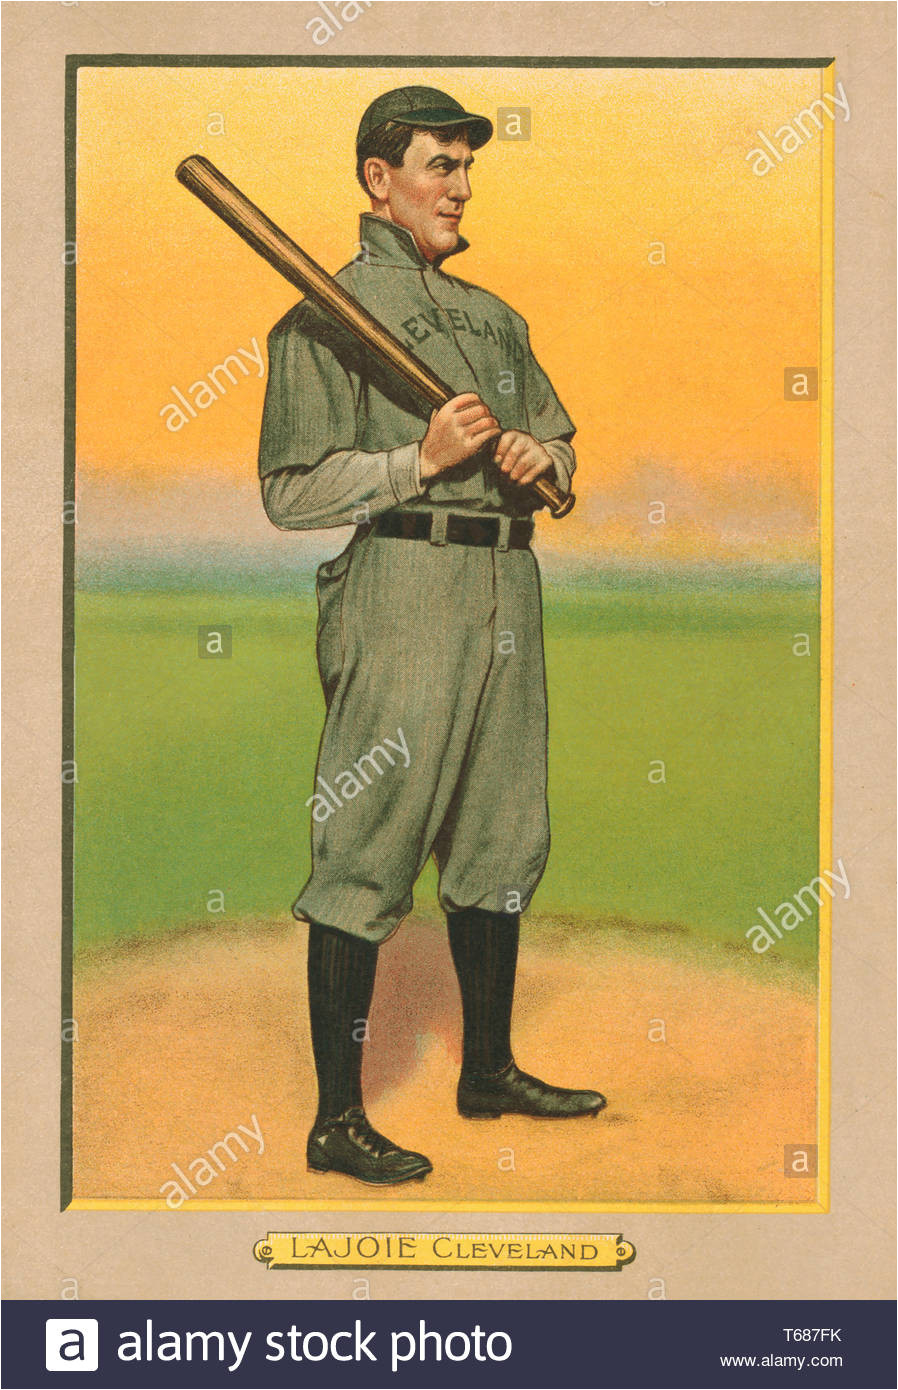 nap nap lajoie cleveland baseball card portrait american tobacco company 1911 t687fk jpg